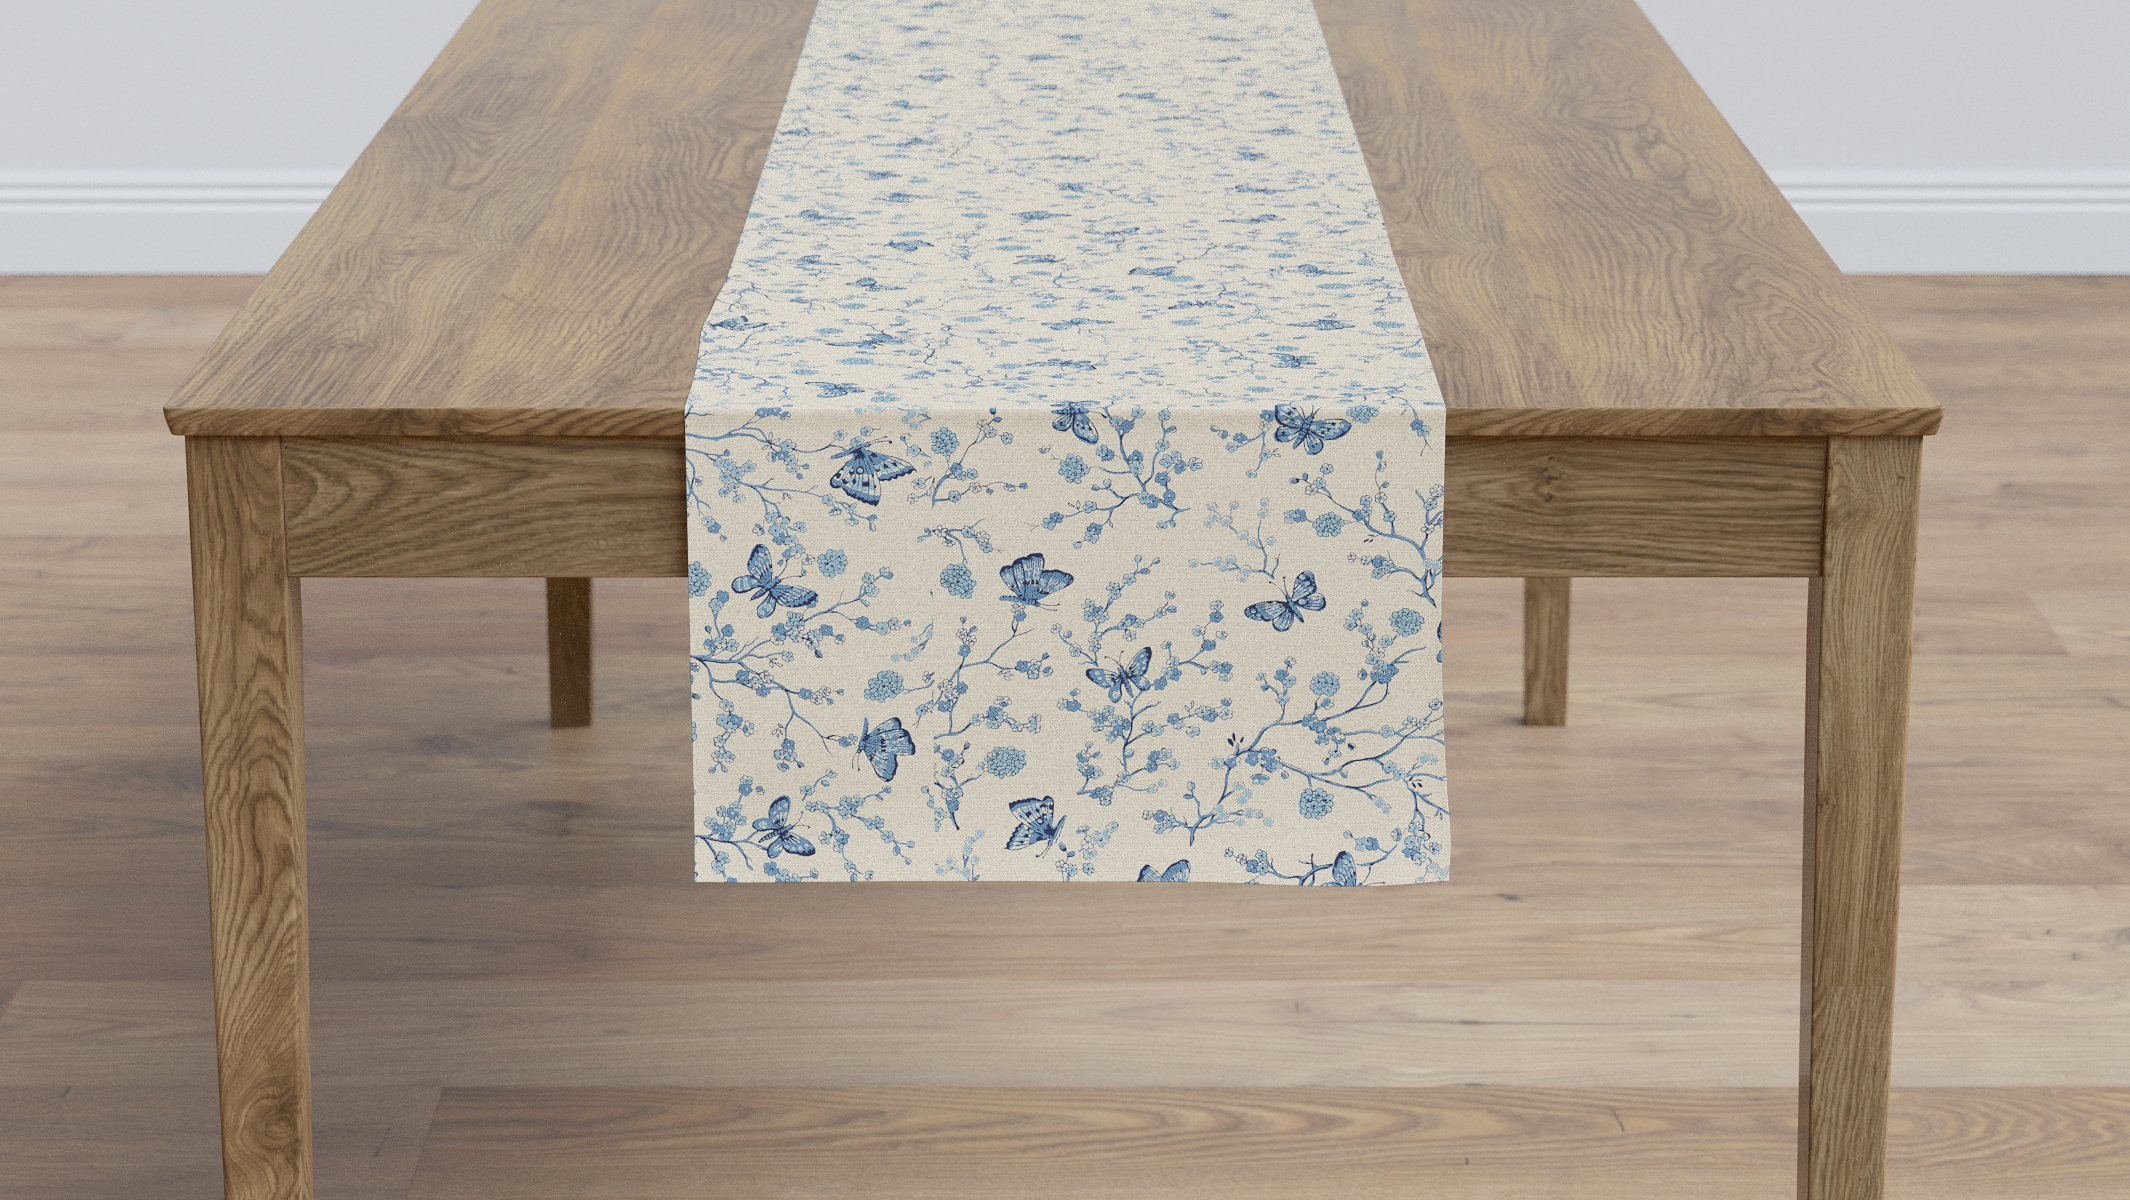 Table Runner 16" x 120", Delft Mariposa, 16" x 120" - Image 1